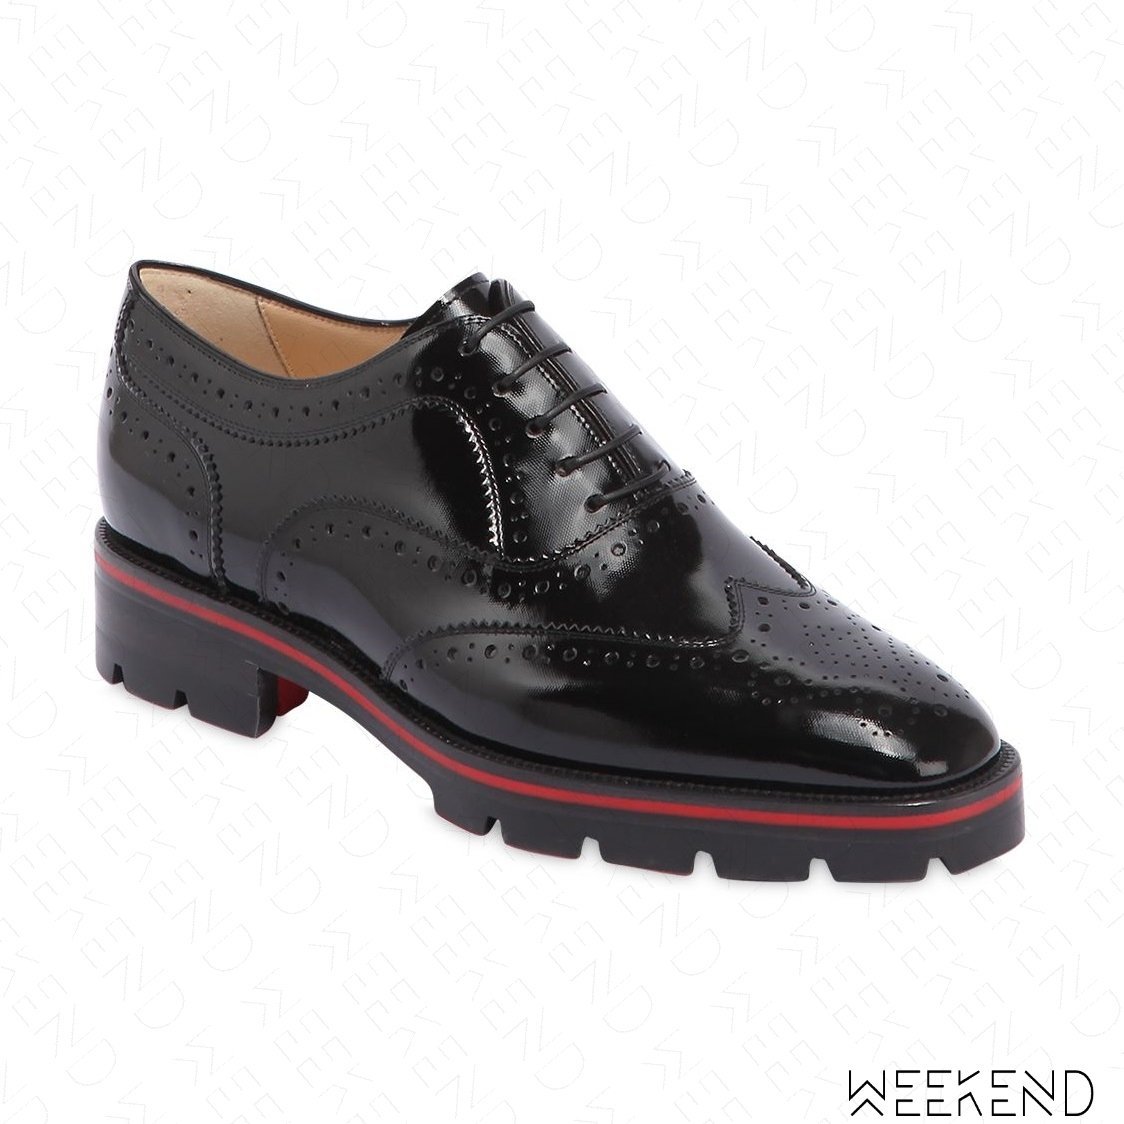 WEEKEND】 LOUBOUTIN Brogue 皮革 黑色 皮鞋 紅底鞋 Yahoo奇摩拍賣